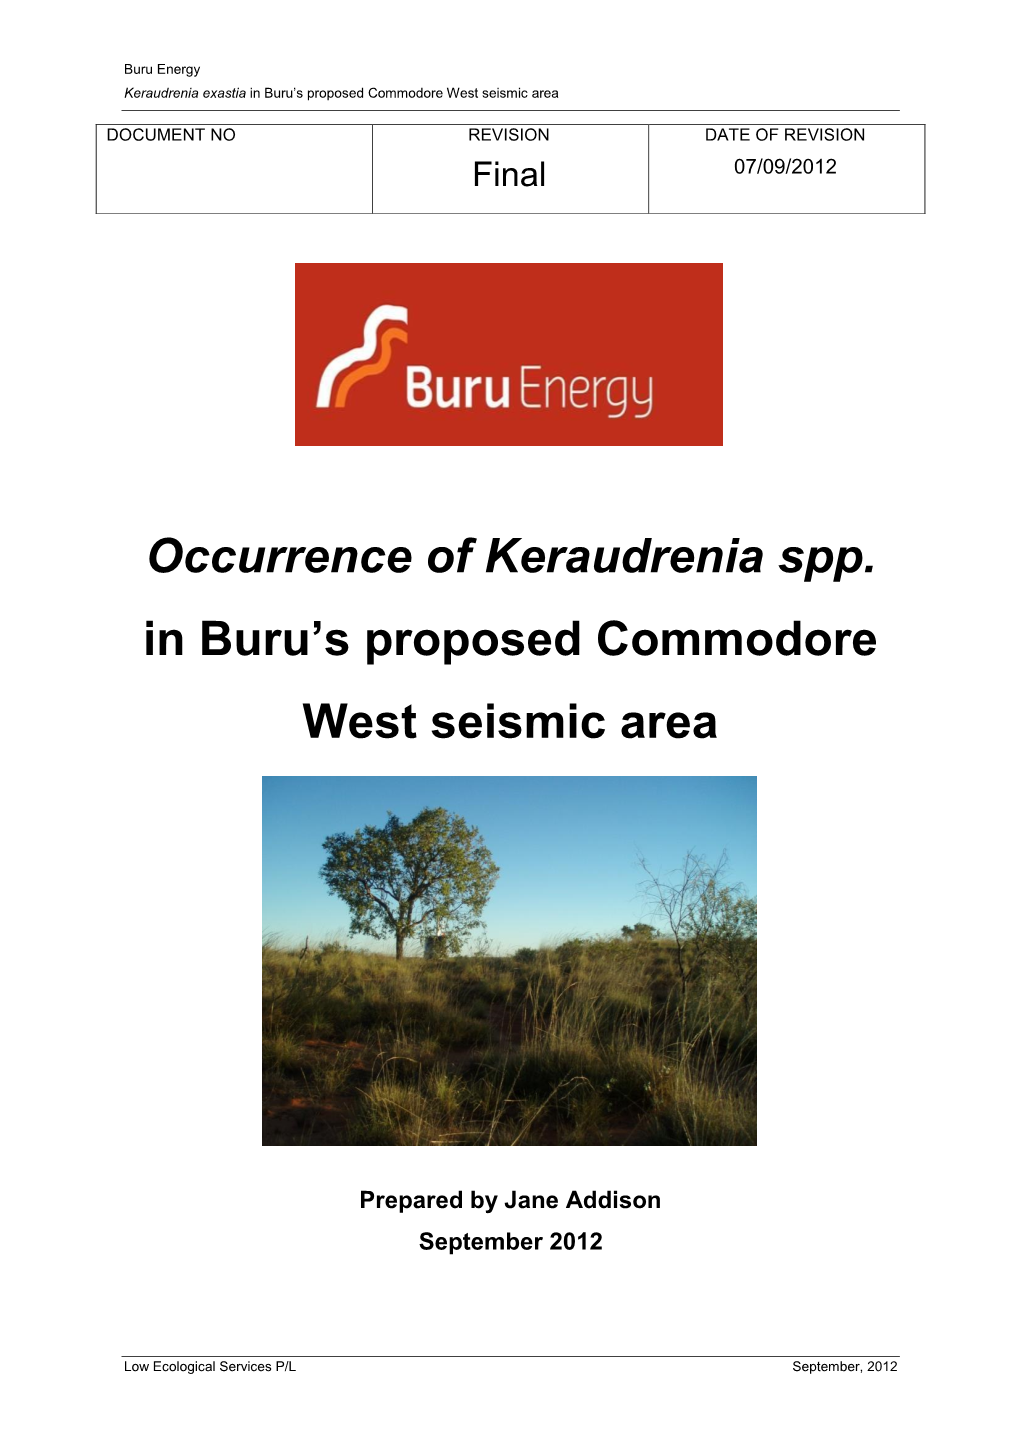 Occurrence of Keraudrenia Spp. in Buru's Proposed Commodore West